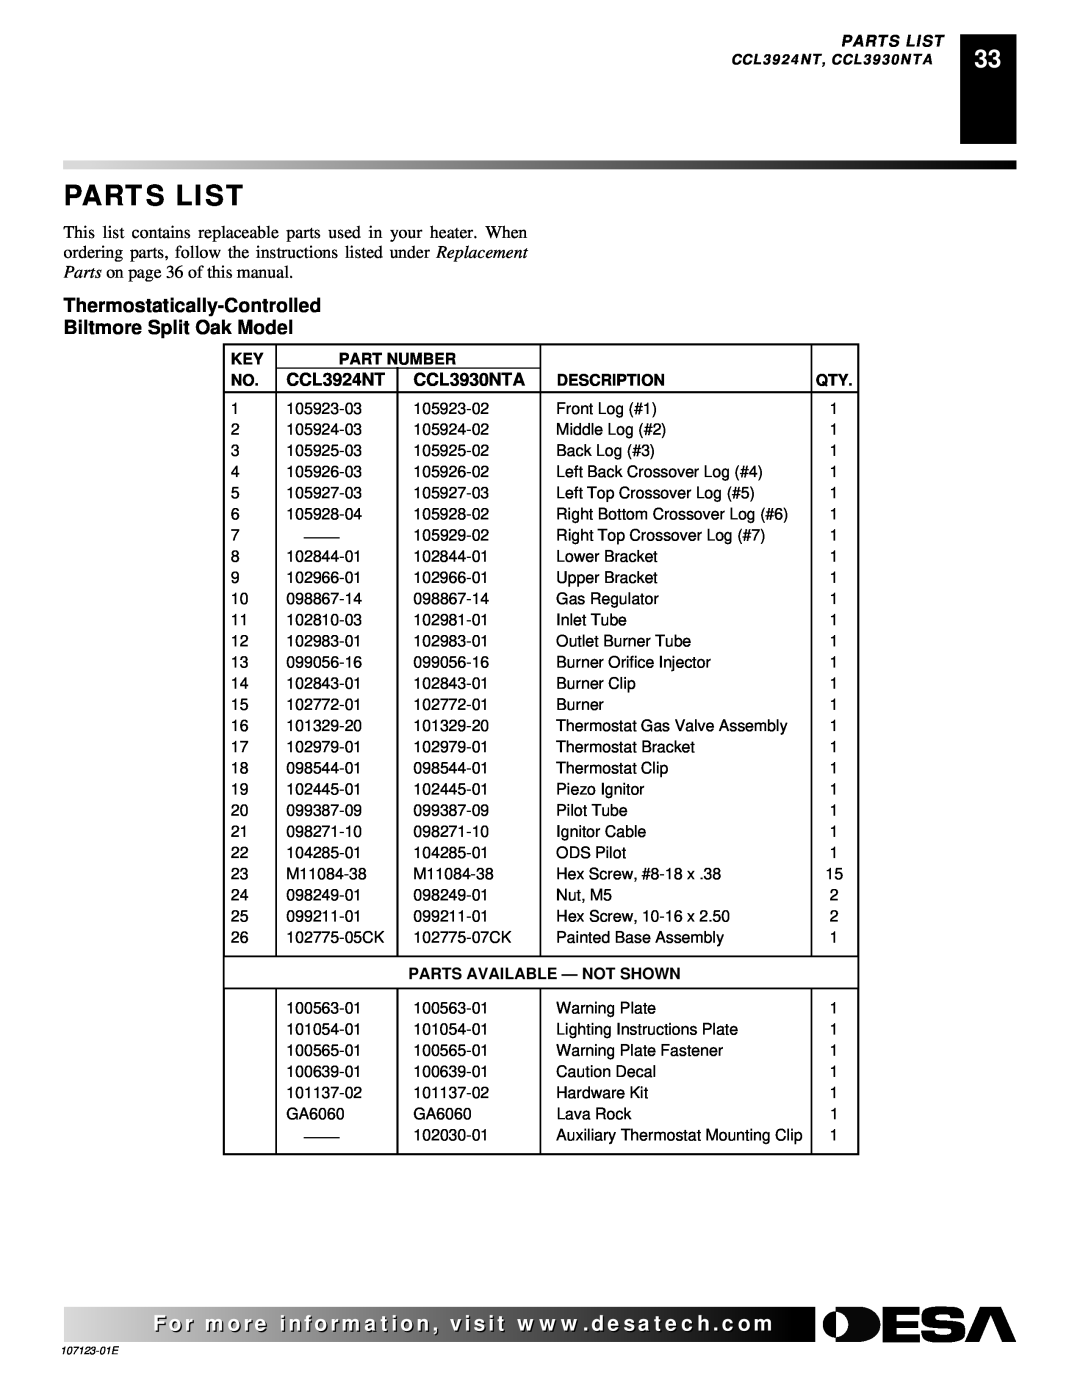 Desa CGD3018NT, CRL3124N, CRL2718N, CCL3018NT, CGD3924NT Parts List, Part Number, Description, Parts Available - Not Shown 